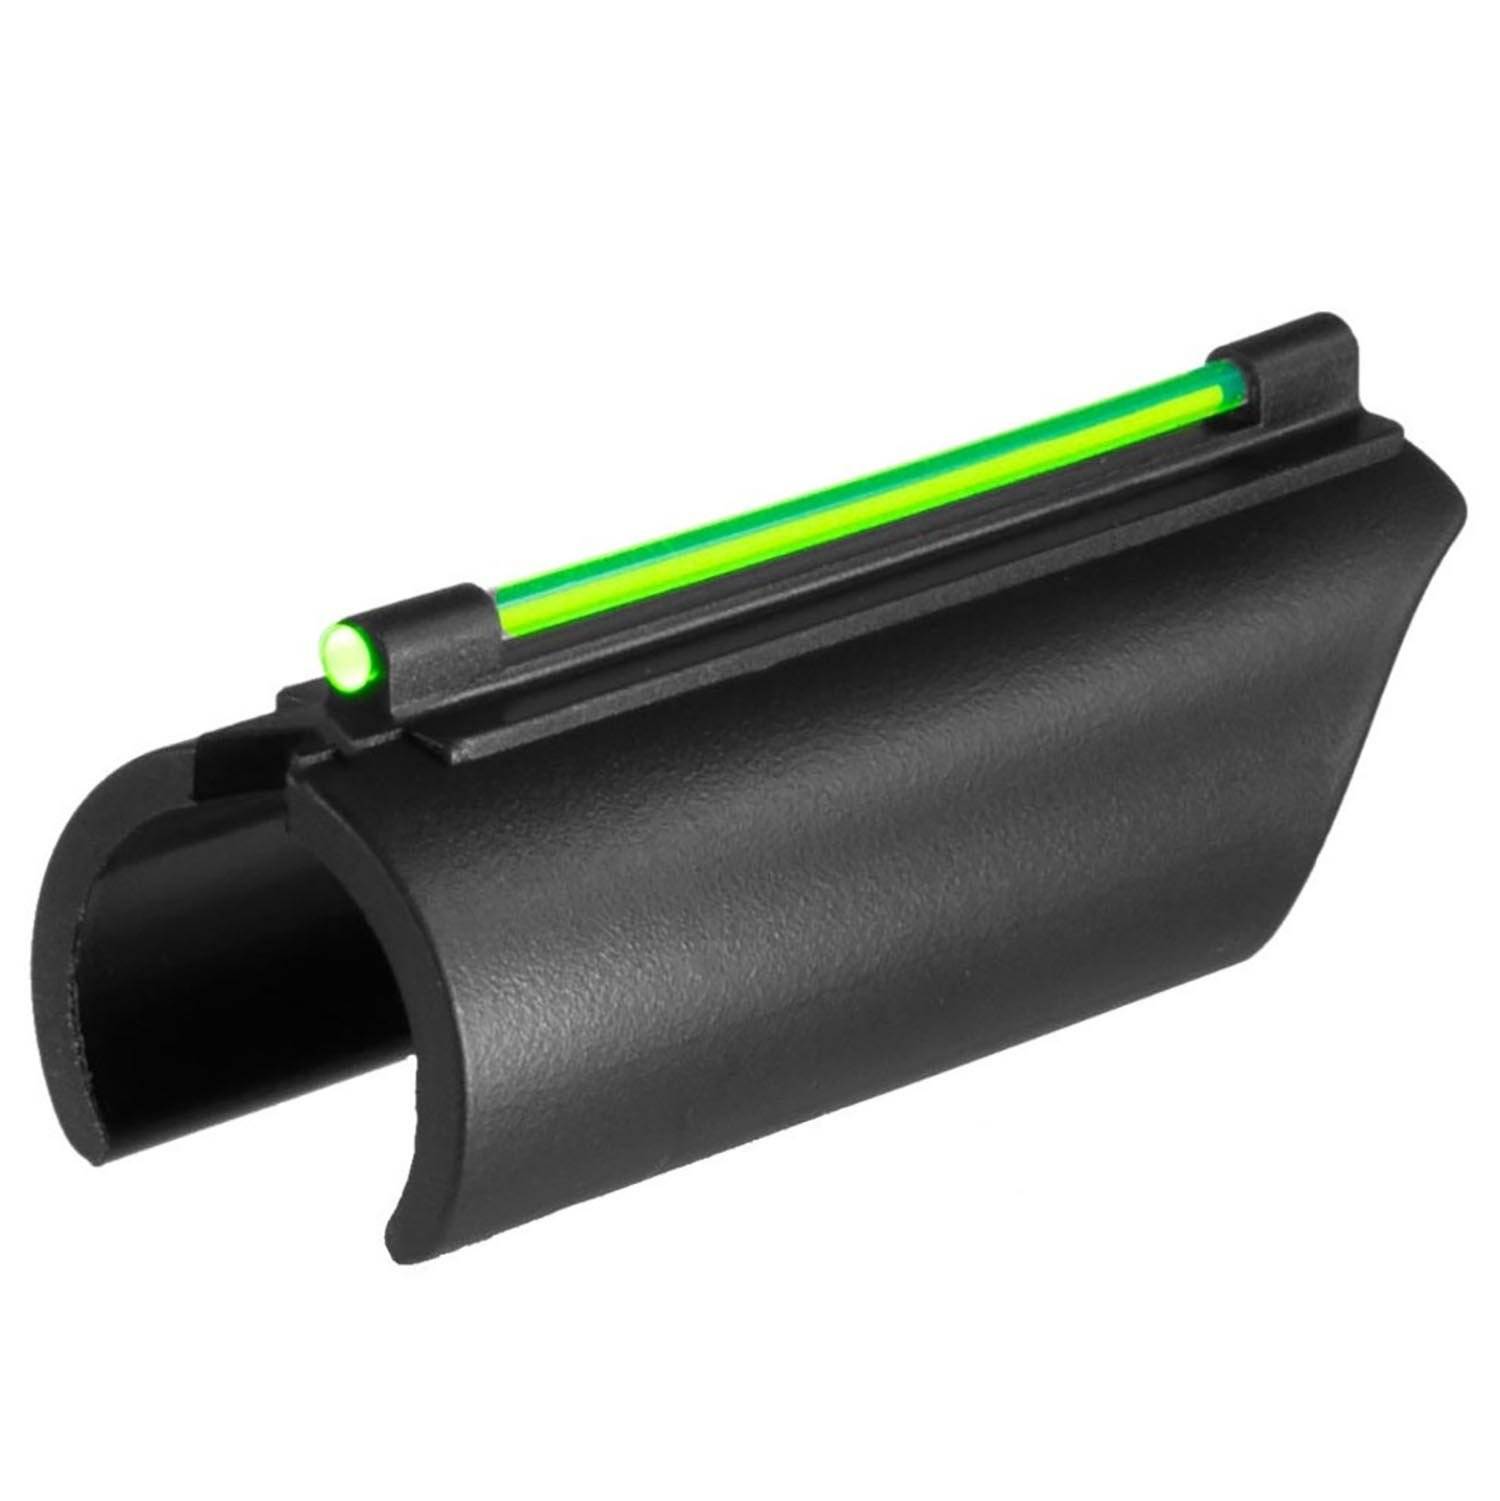 Tru Glo Green Glo-Dot II Universal Shotgun Sight